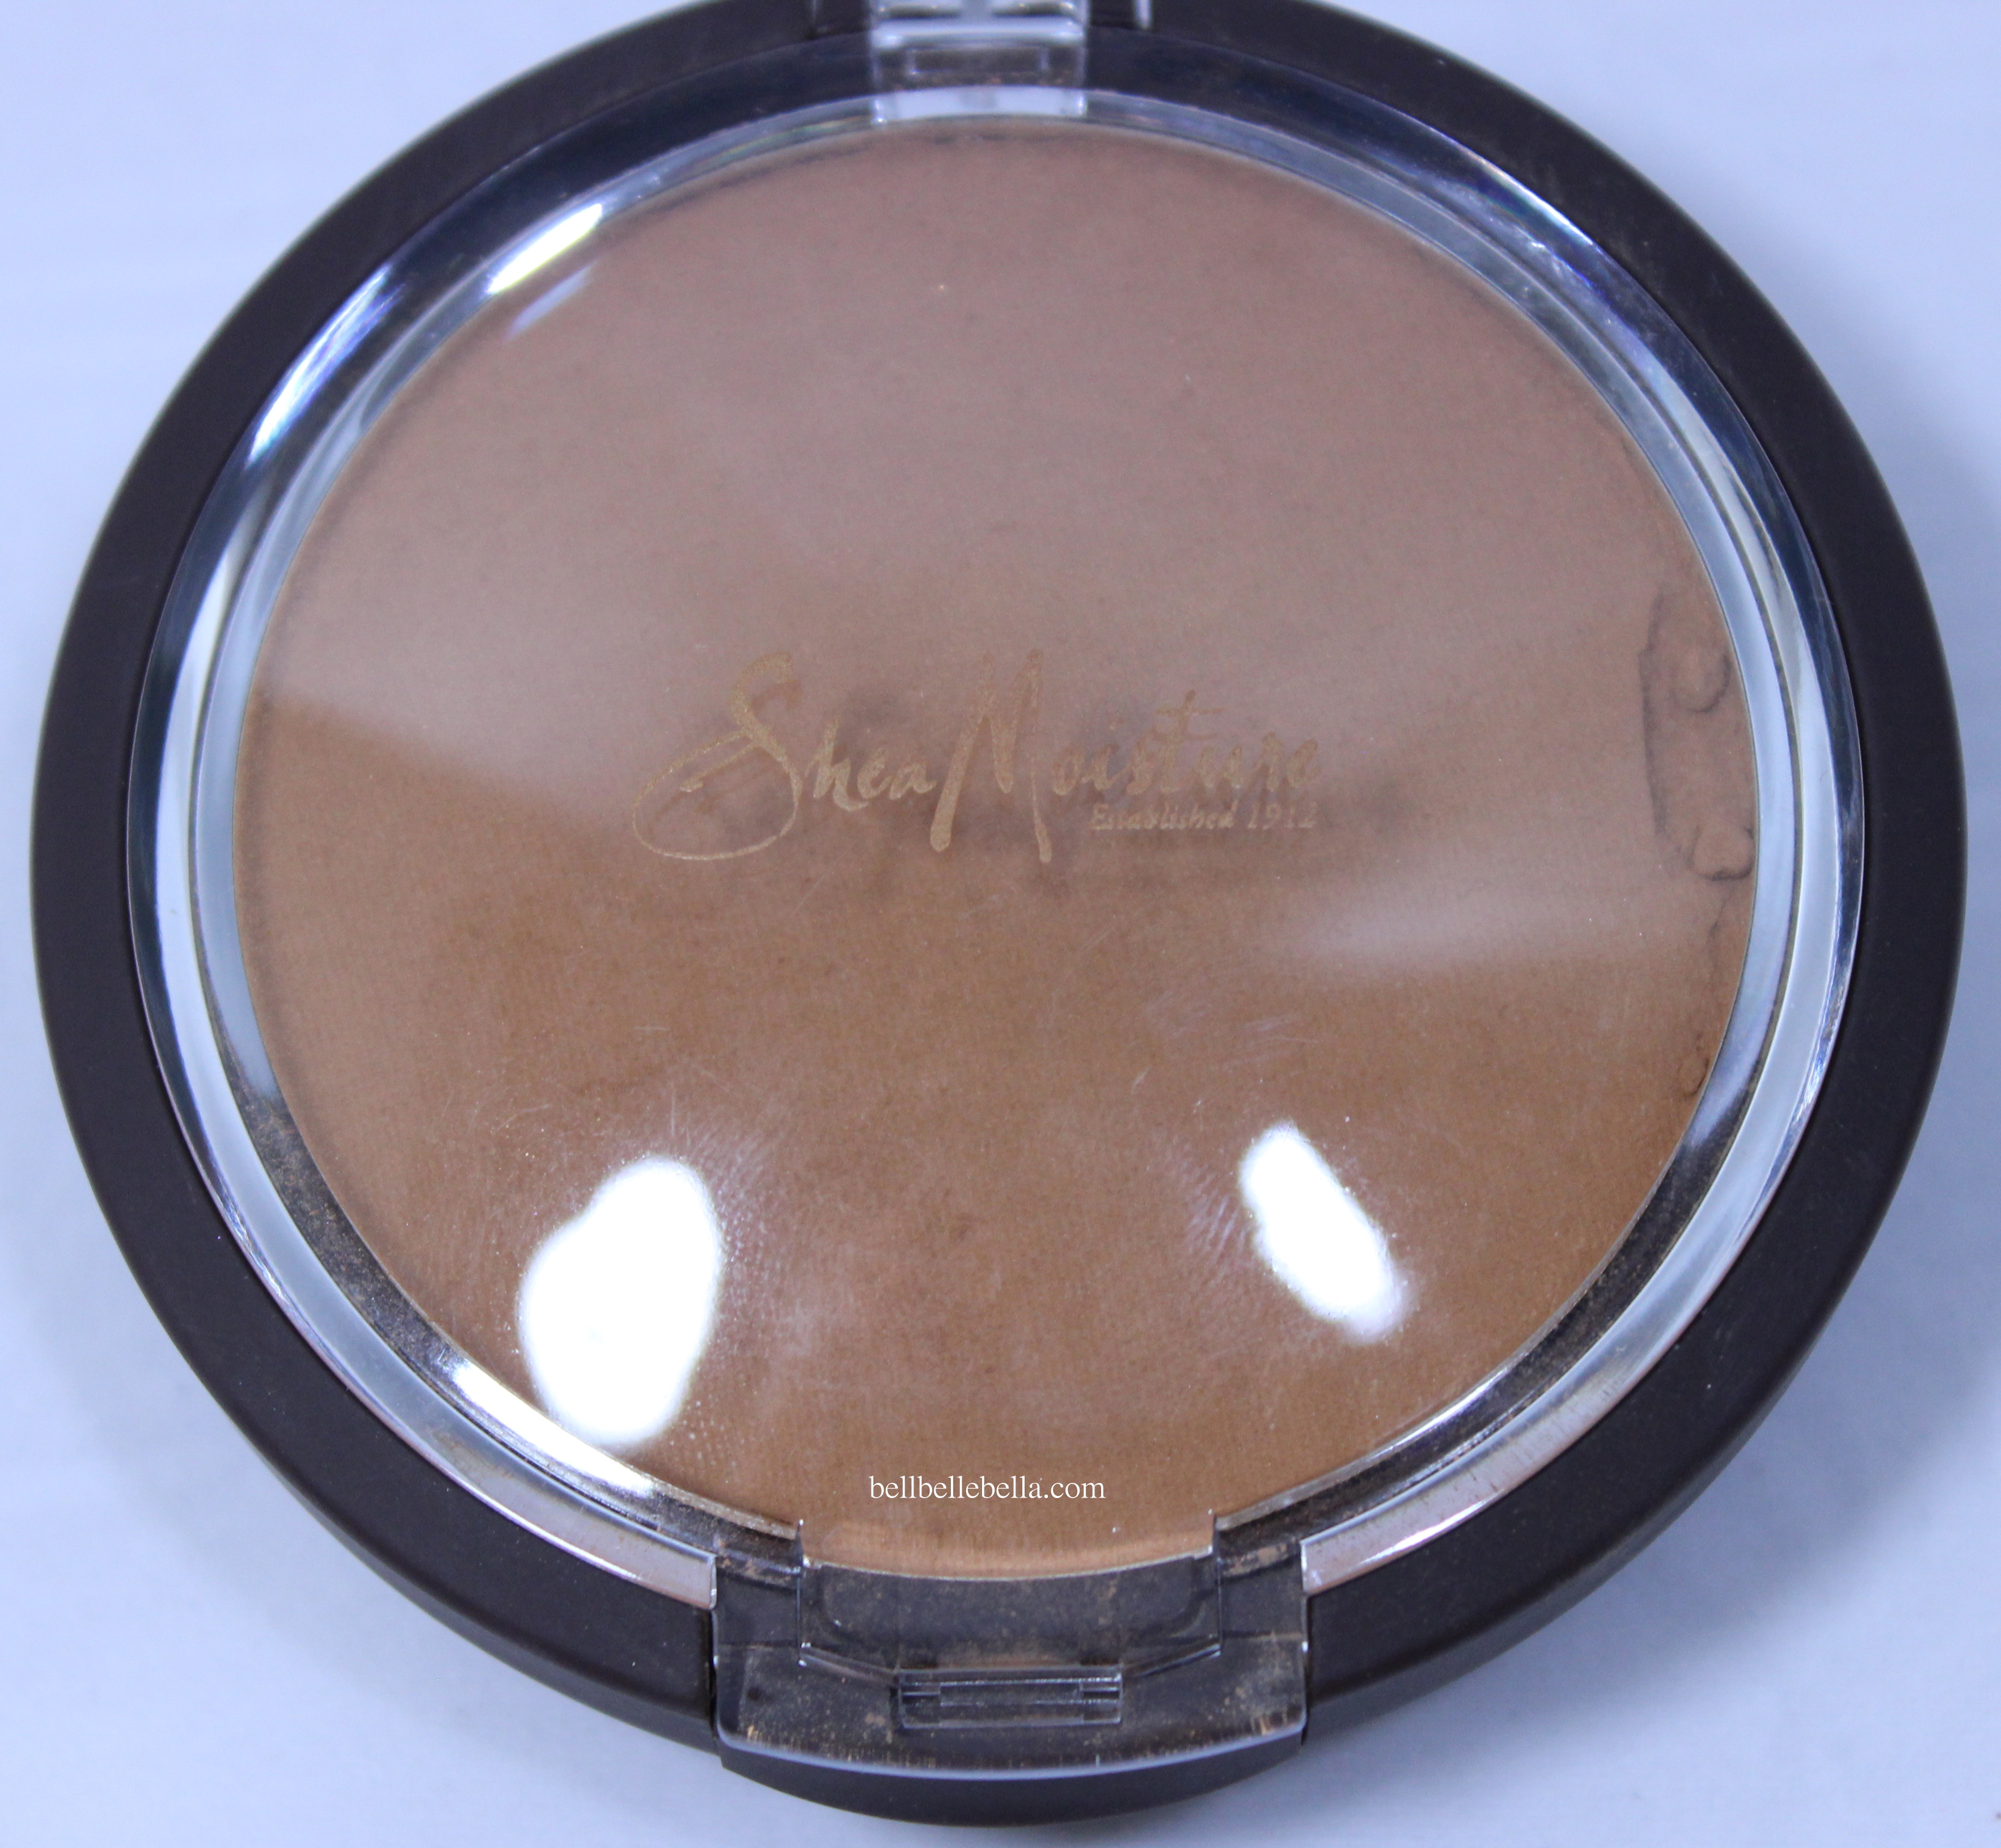 Shea Moisture Cosmetics Wet/Dry Pressed Powder Foundation